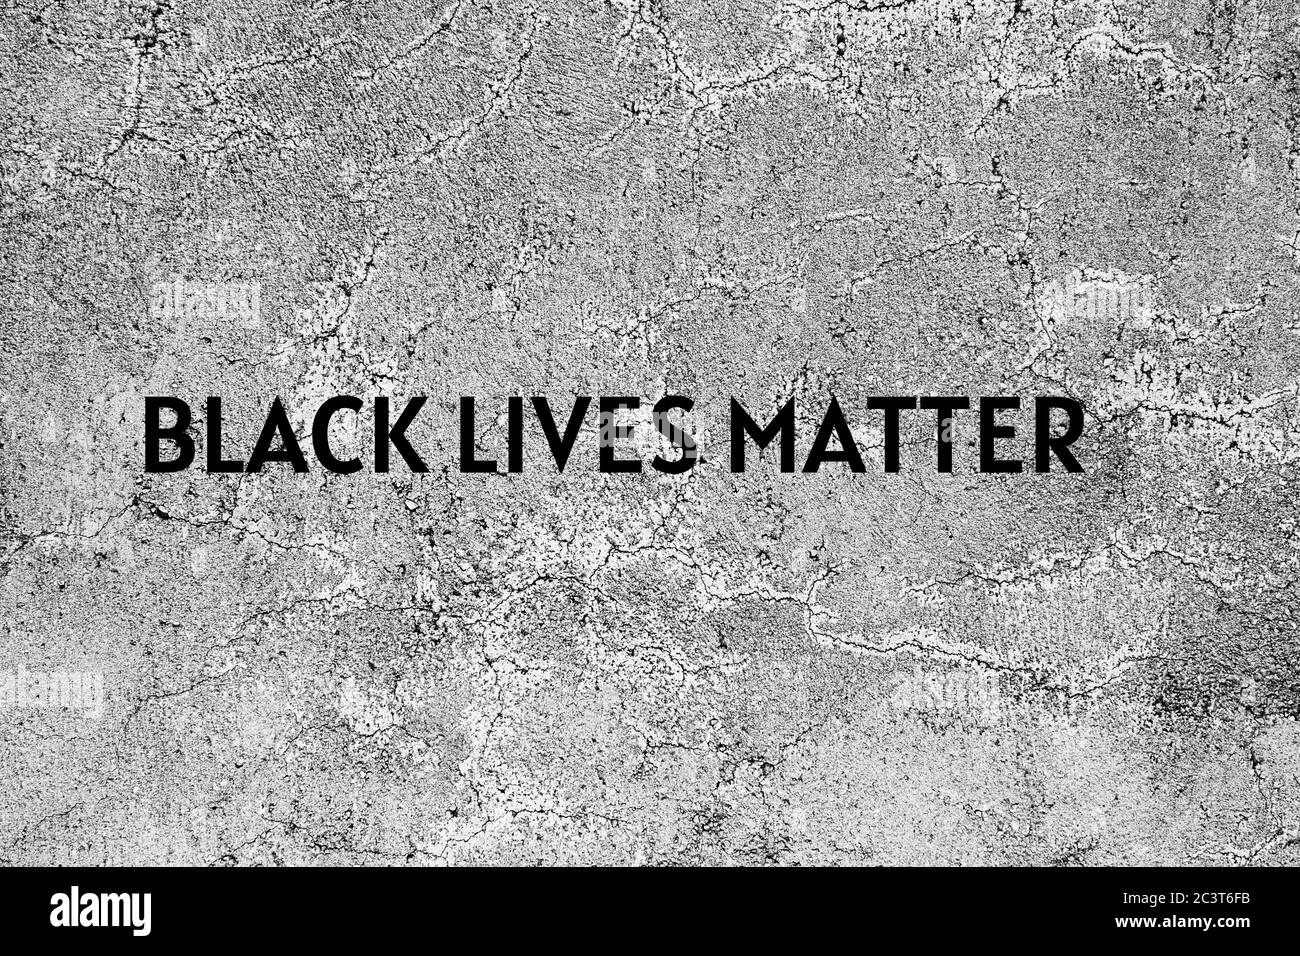 Black lives matter background on asphalt surface. Black and white. Stop racism layout.  Stock Photo